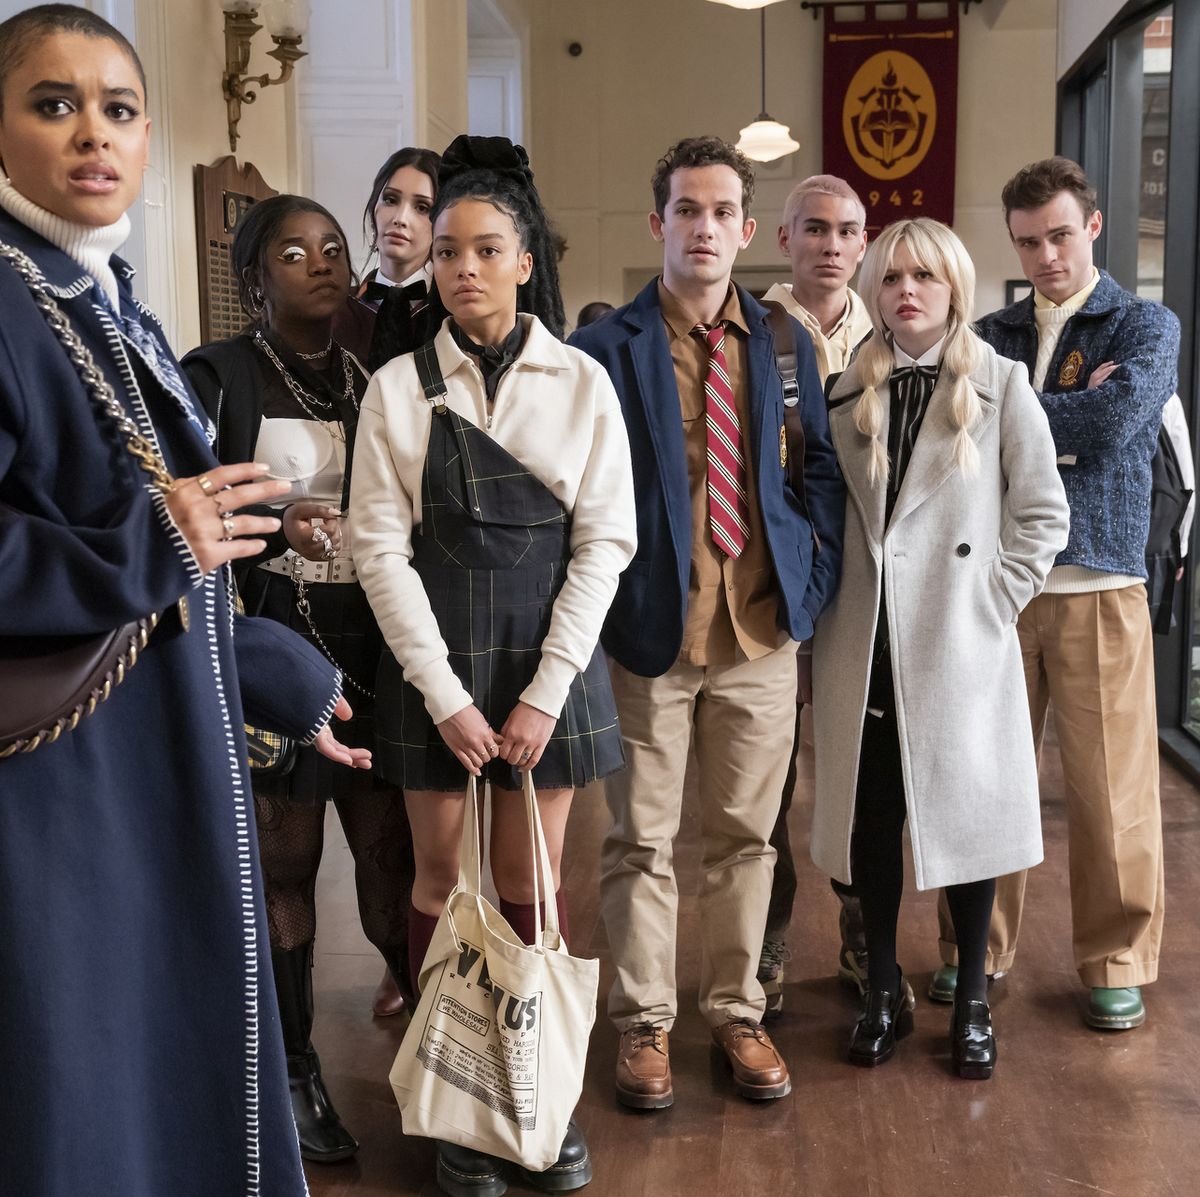 The New 'Gossip Girl' Cast Has The Best Handbags On TV